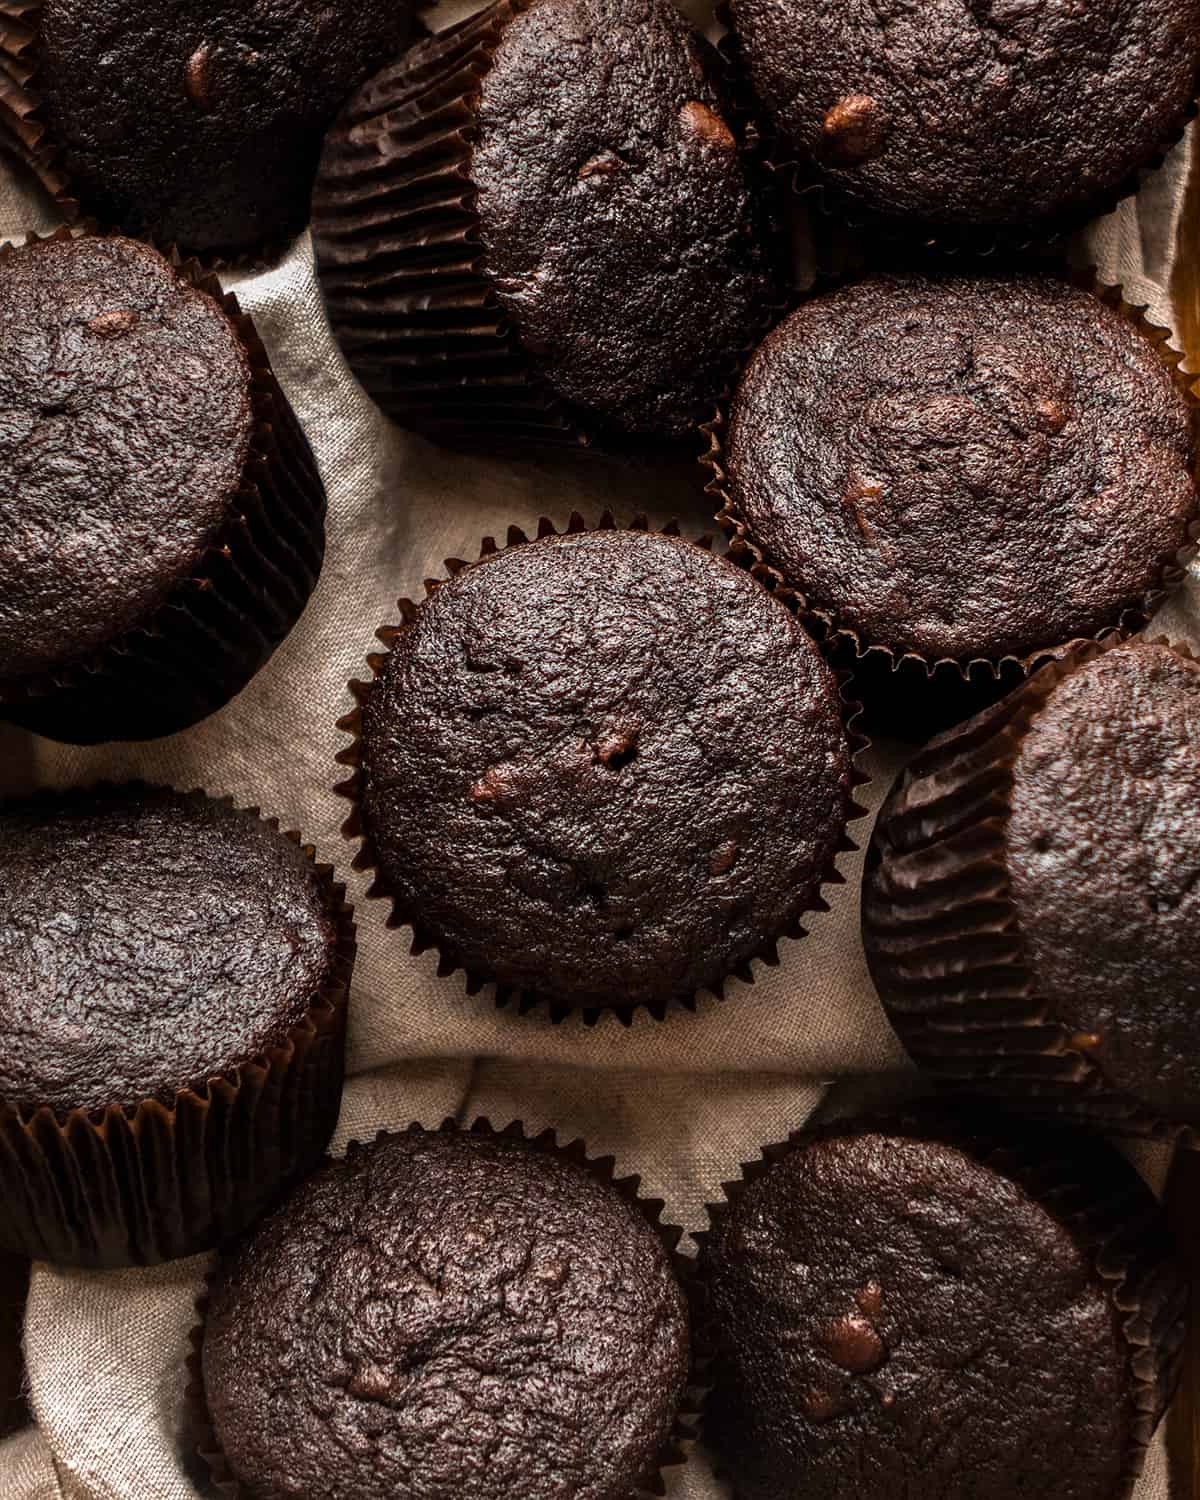 10 Chocolate Banana Muffins after baking